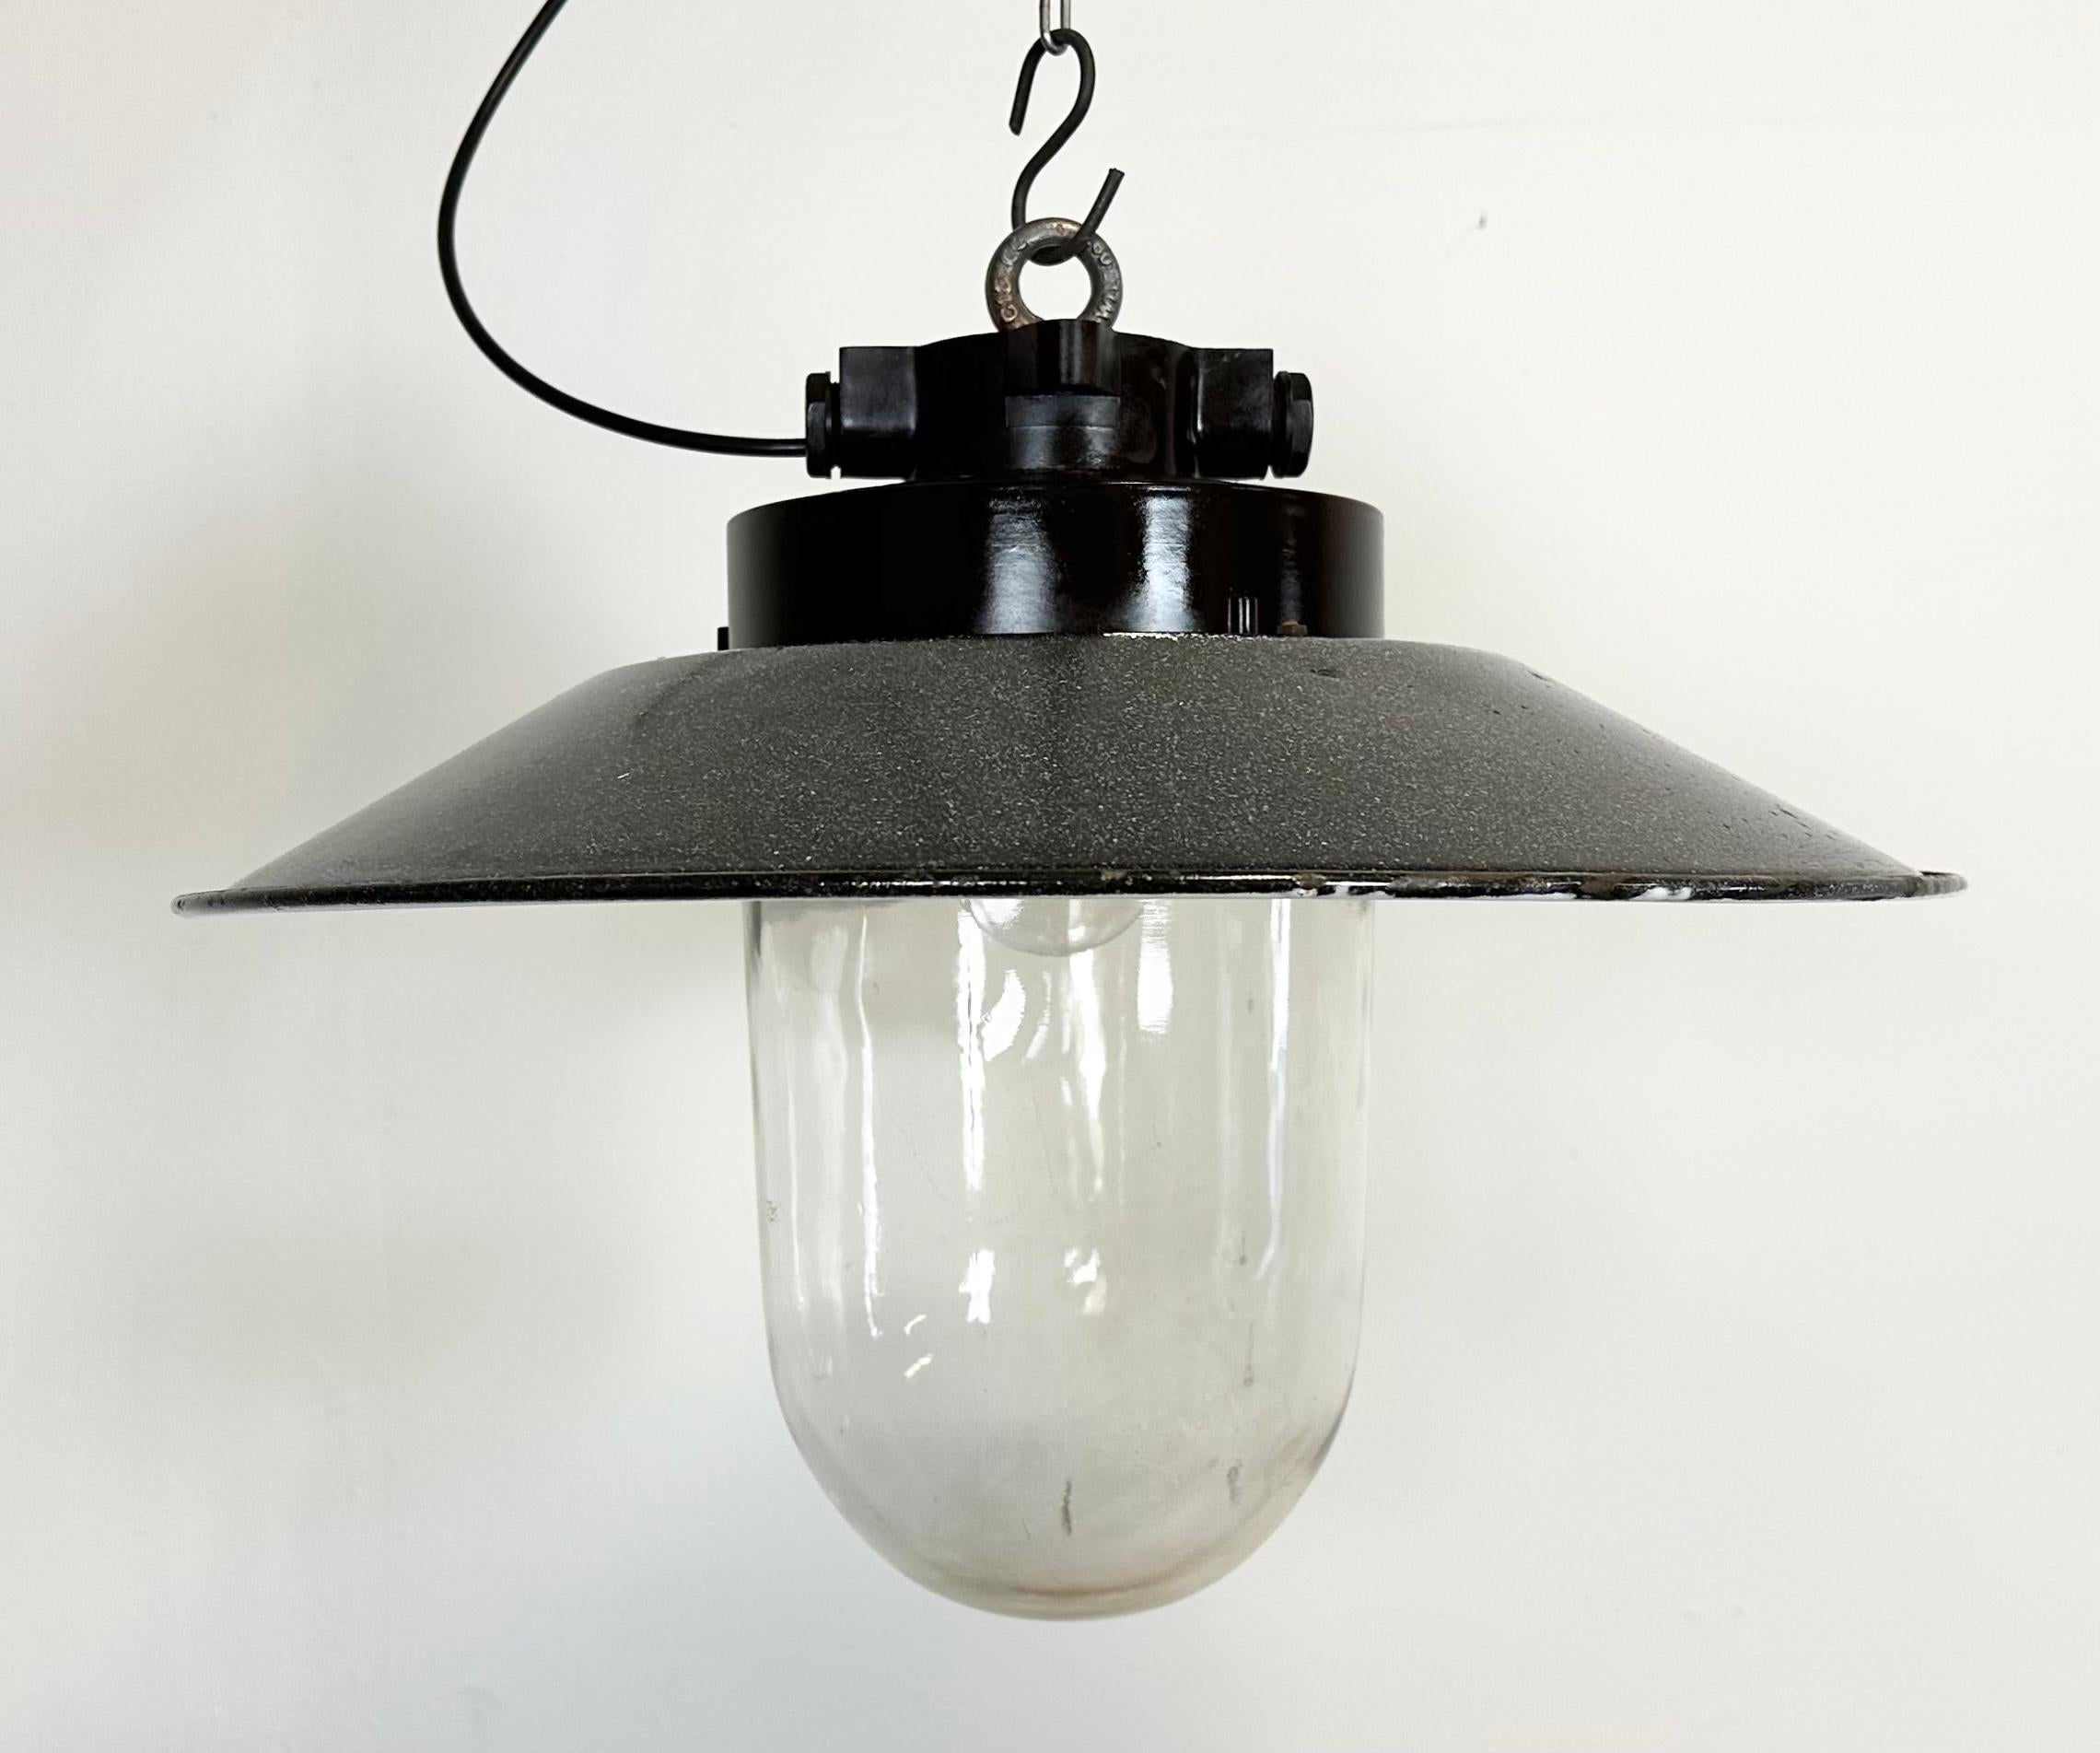 Czech Industrial Grey Enamel Factory Hanging Lamp, 1960s For Sale